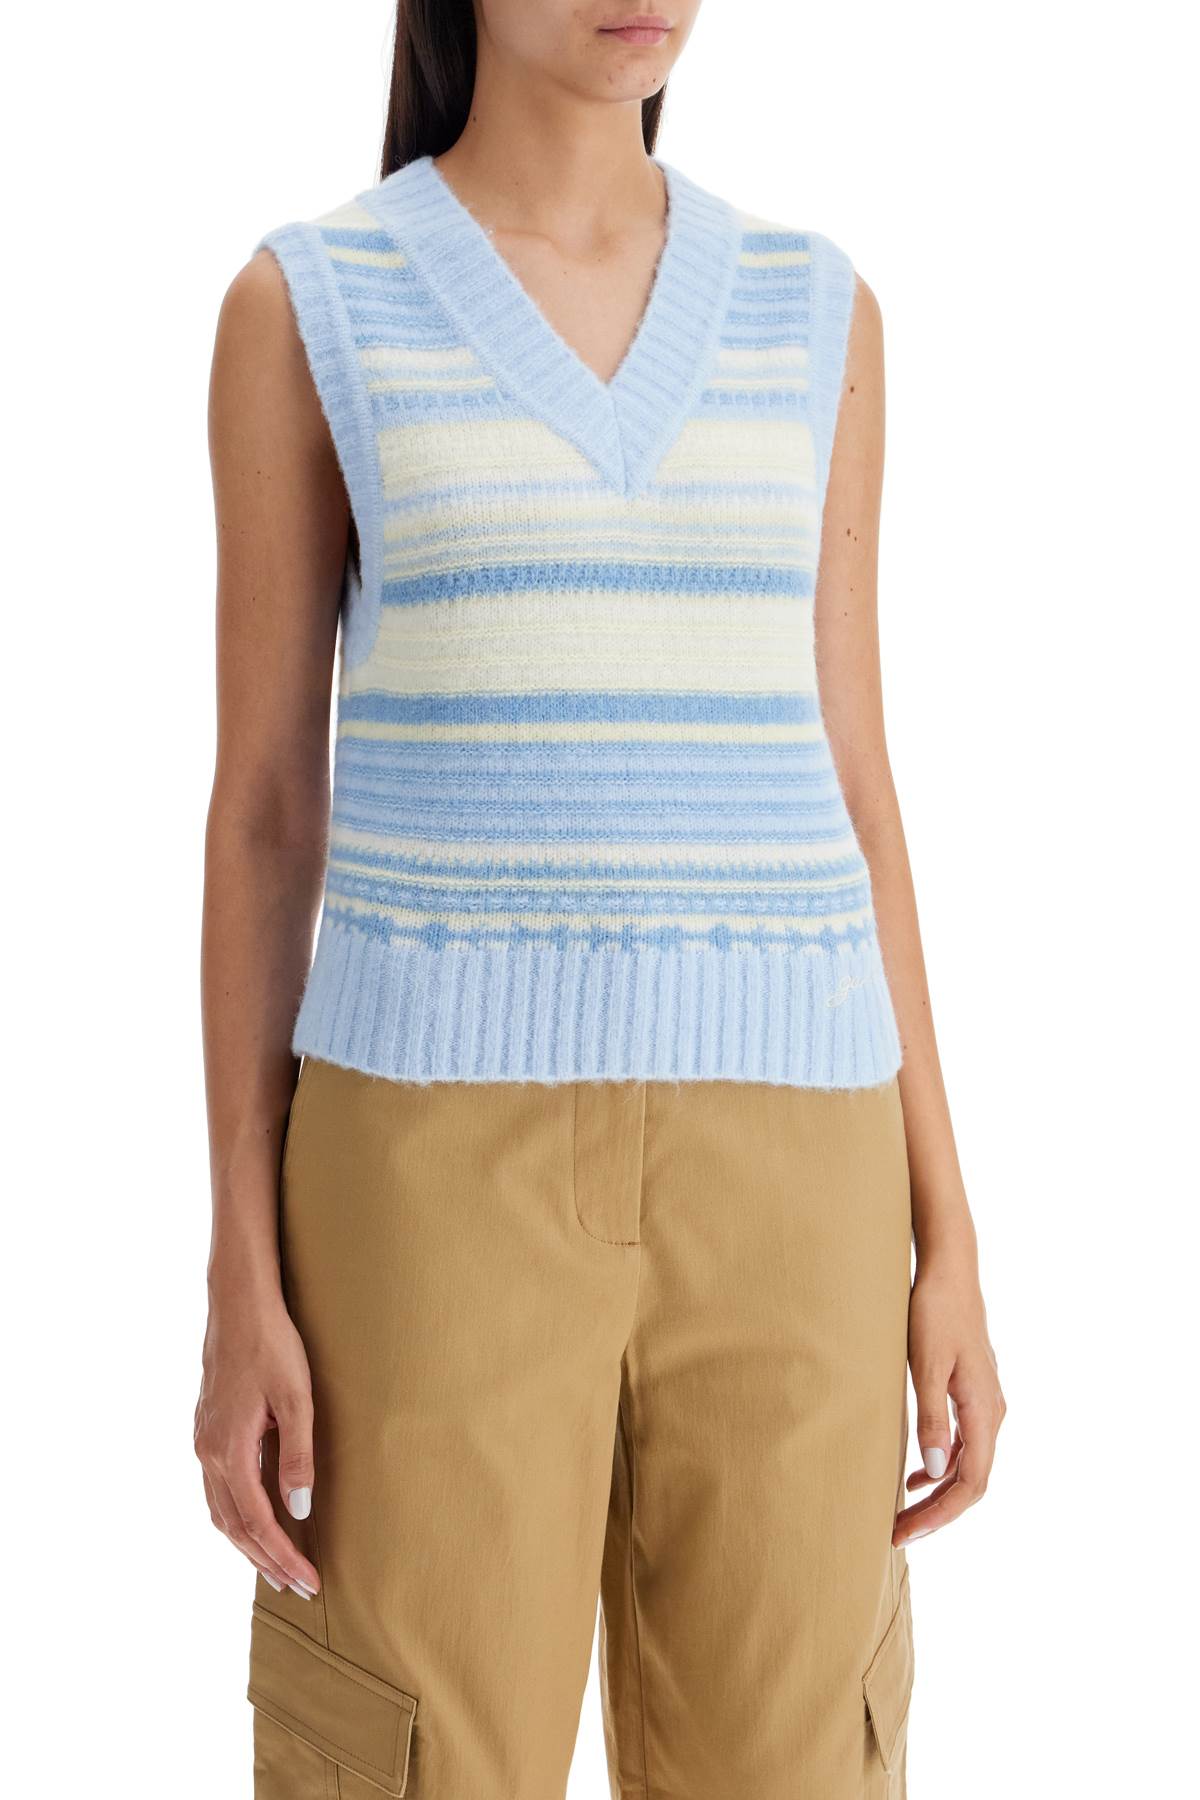 Ganni "soft striped knit vest with a comfortable - Light blue